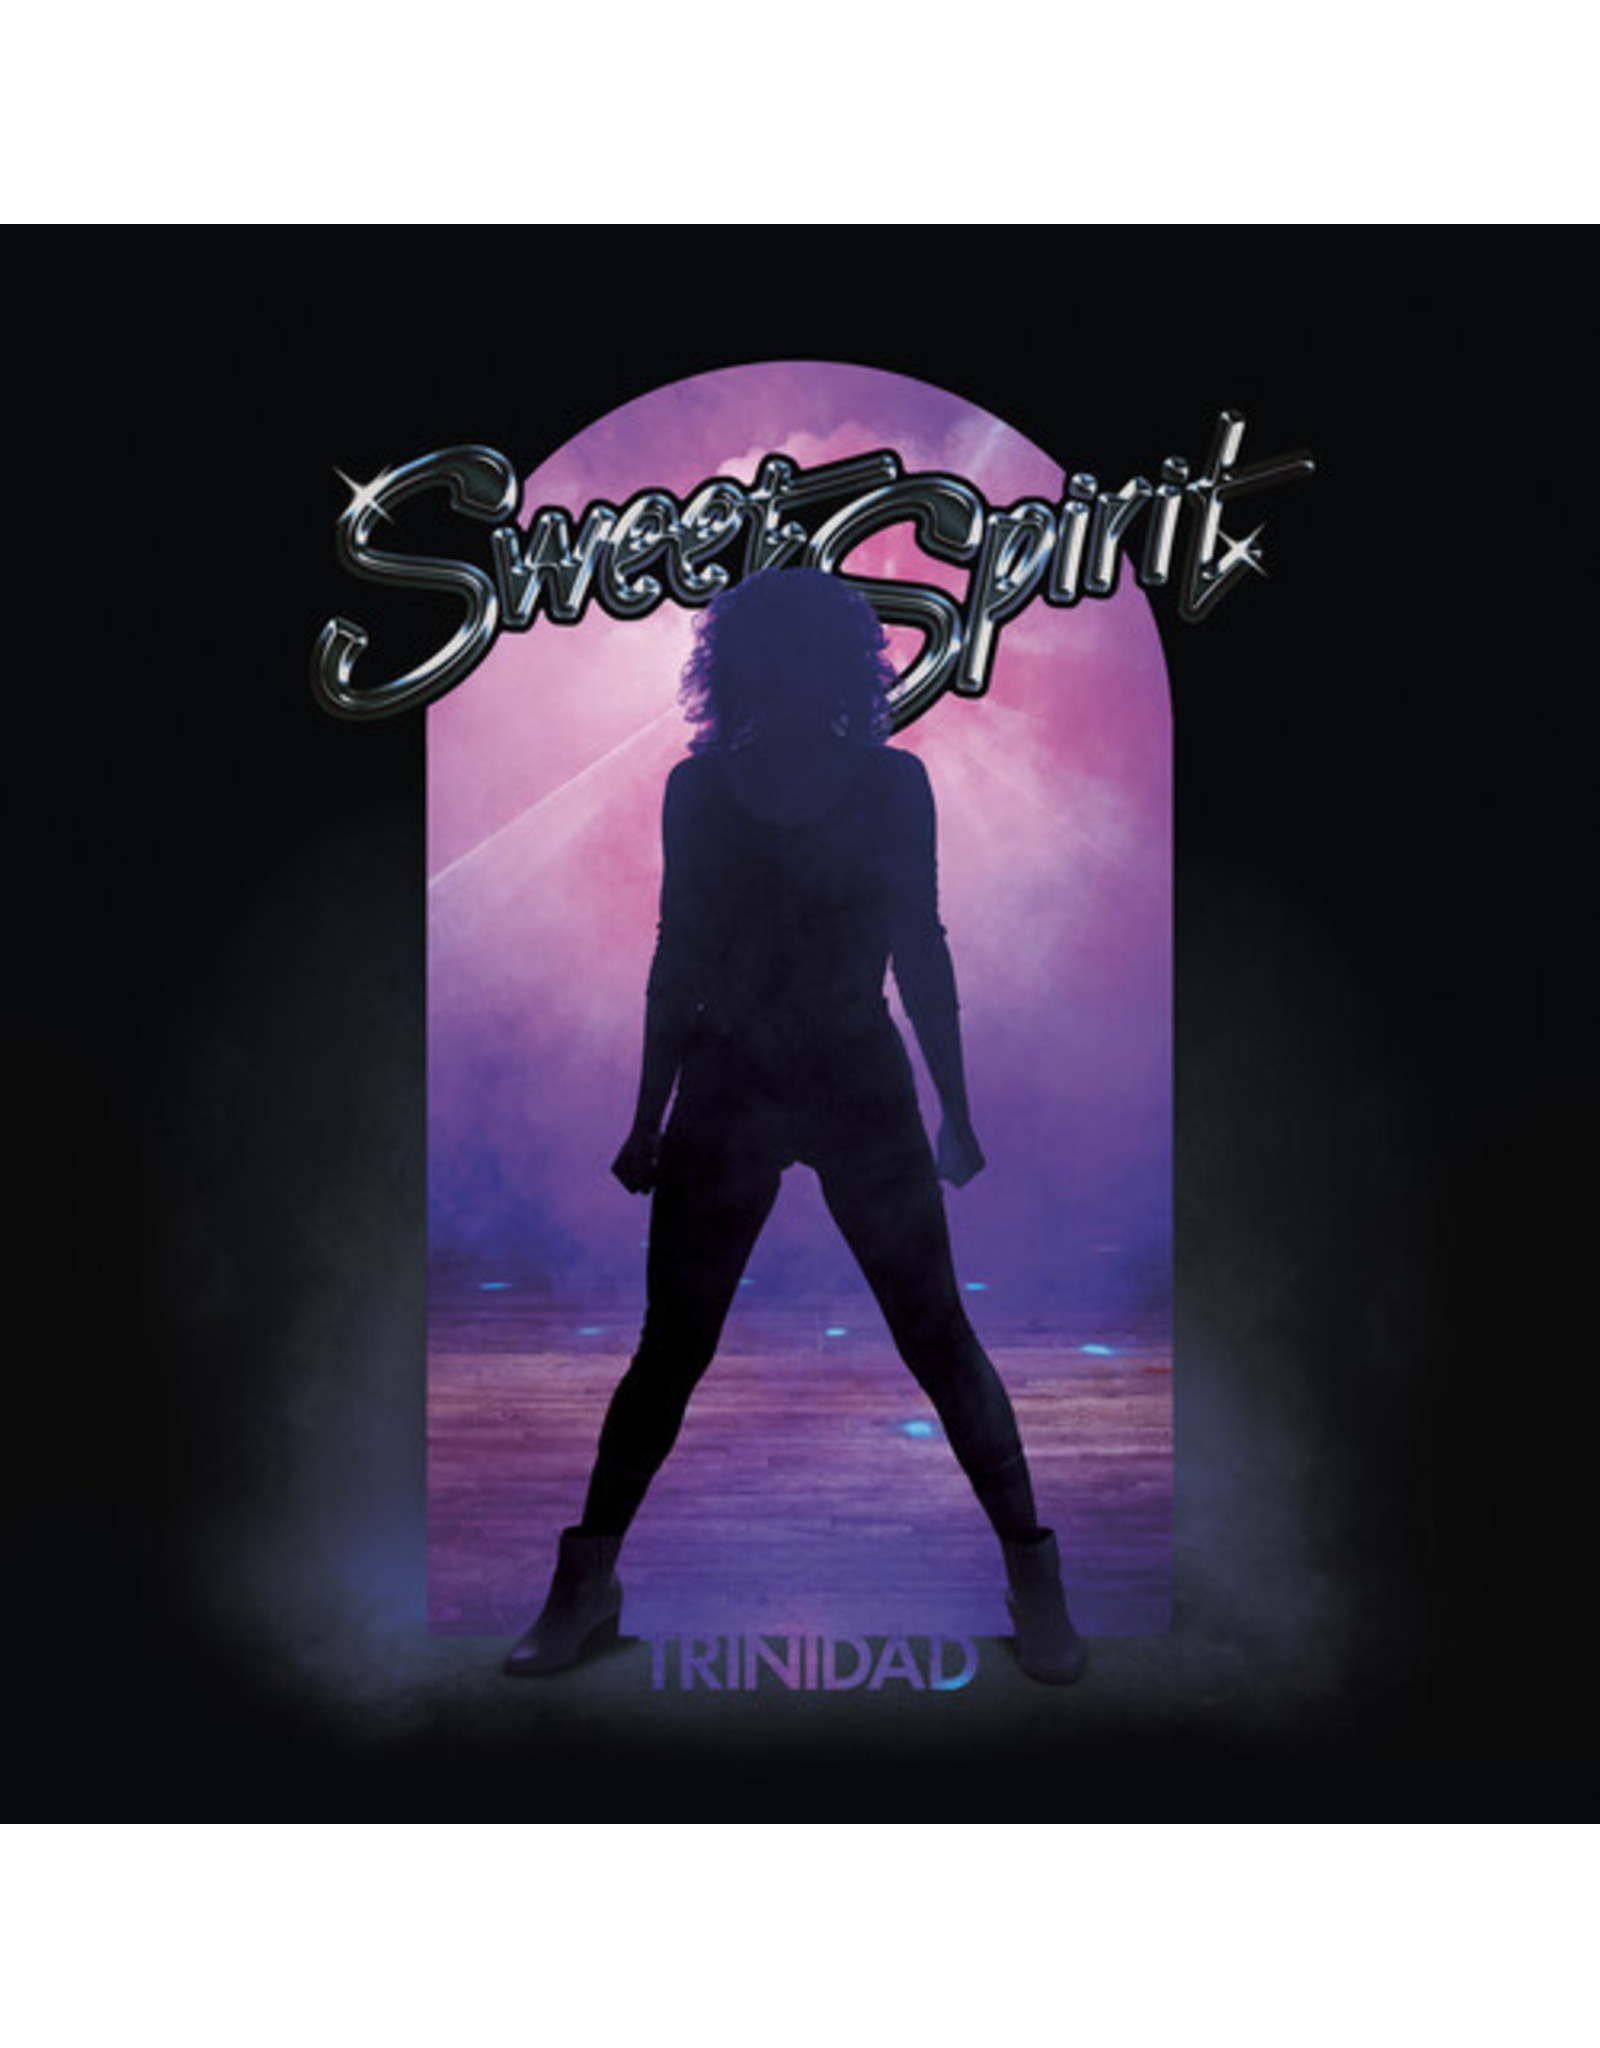 New Vinyl Sweet Spirit - Trinidad LP